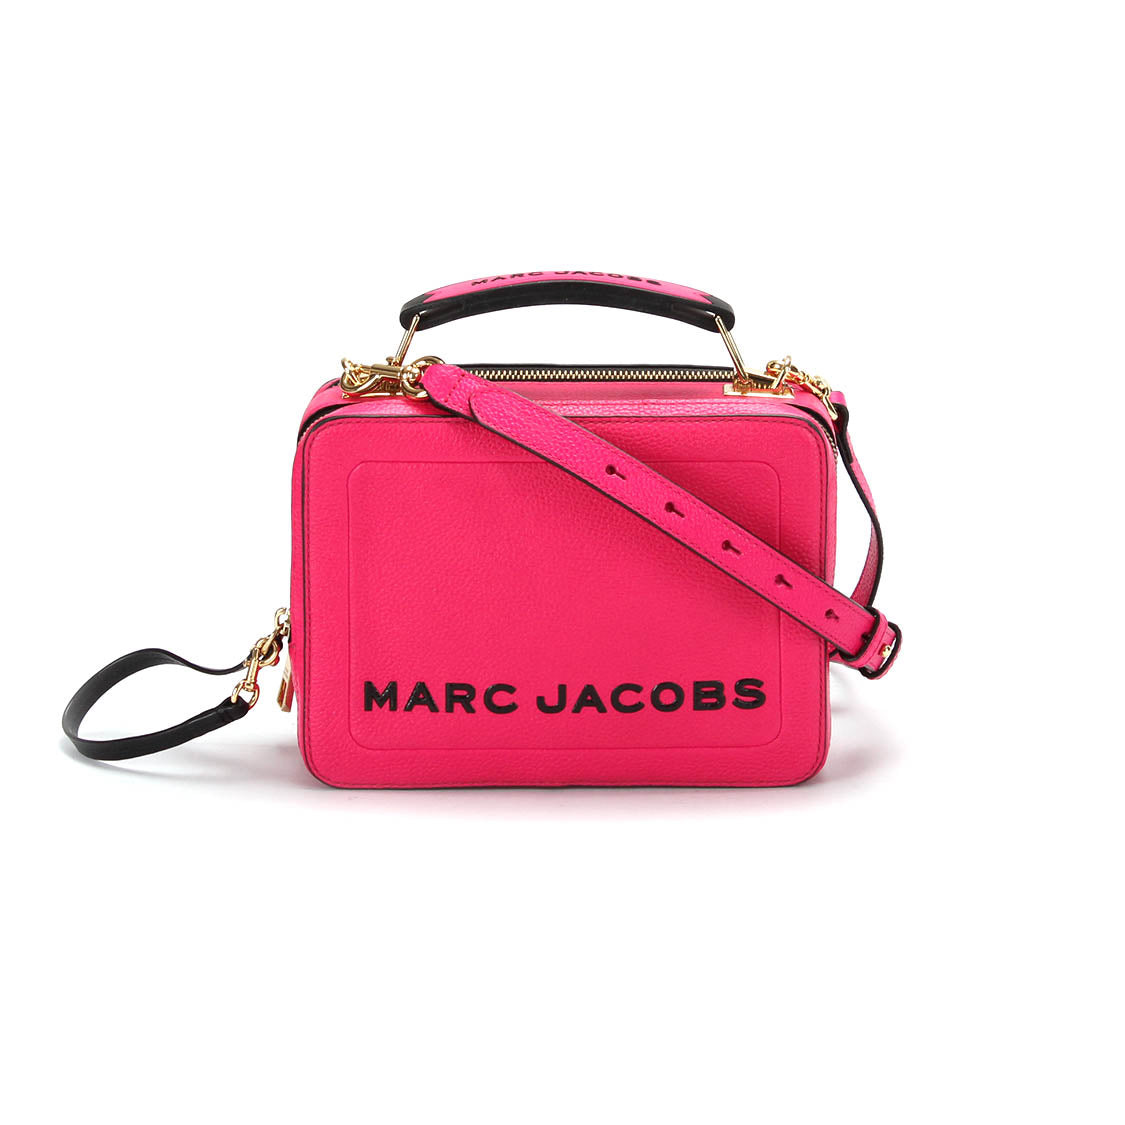 Marc Jacobs  Leather Shoulder Bag PSL1149 in Excellent condition